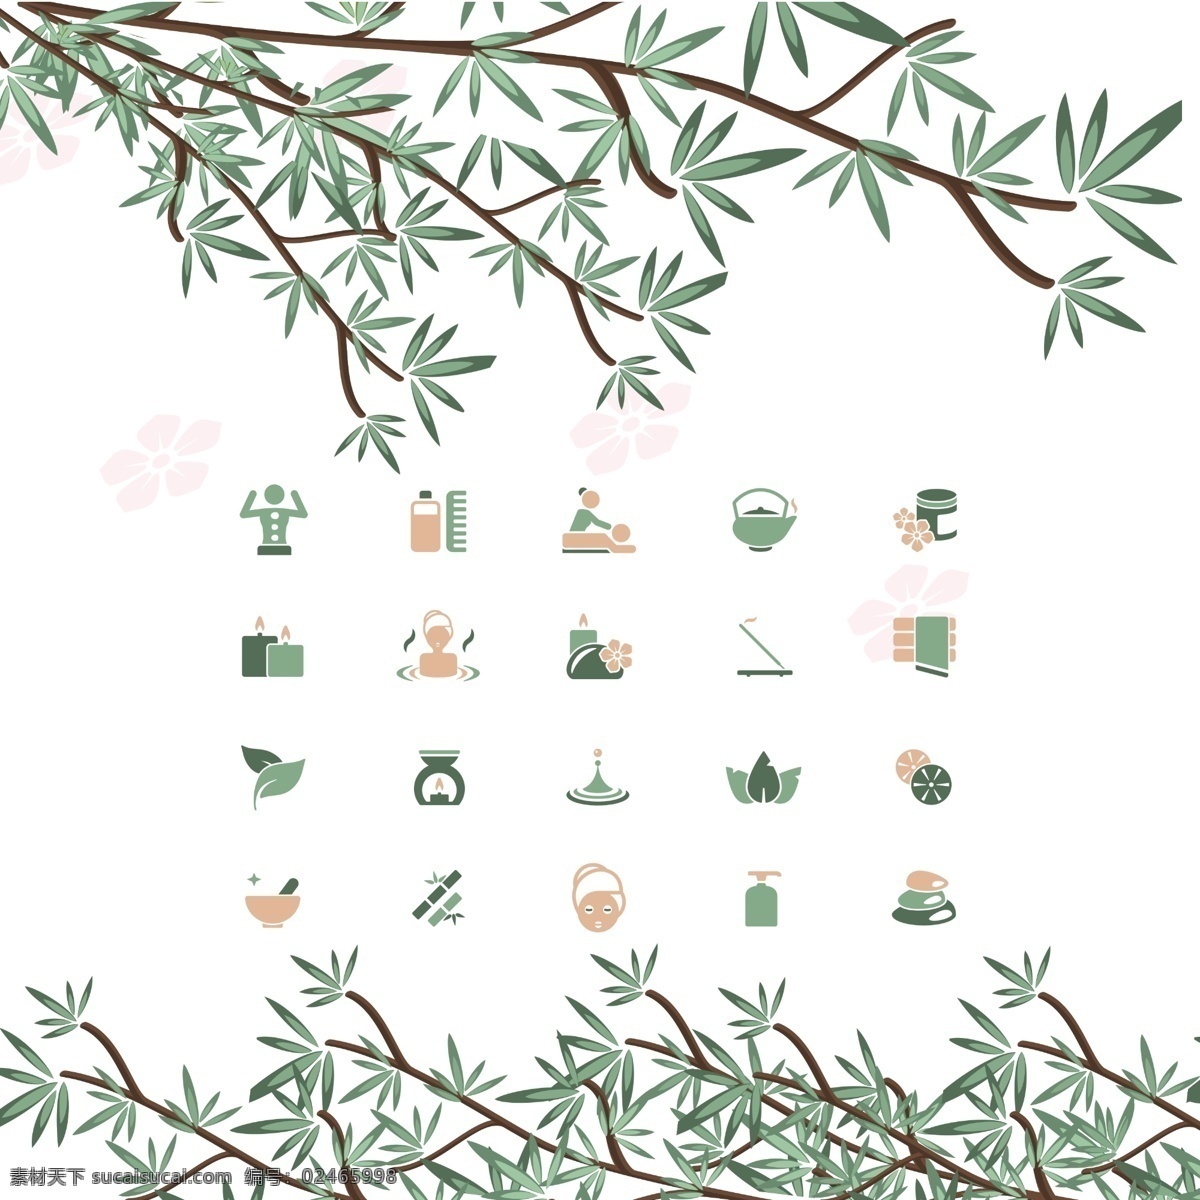 竹林 风格 图标 养生 icon 模板